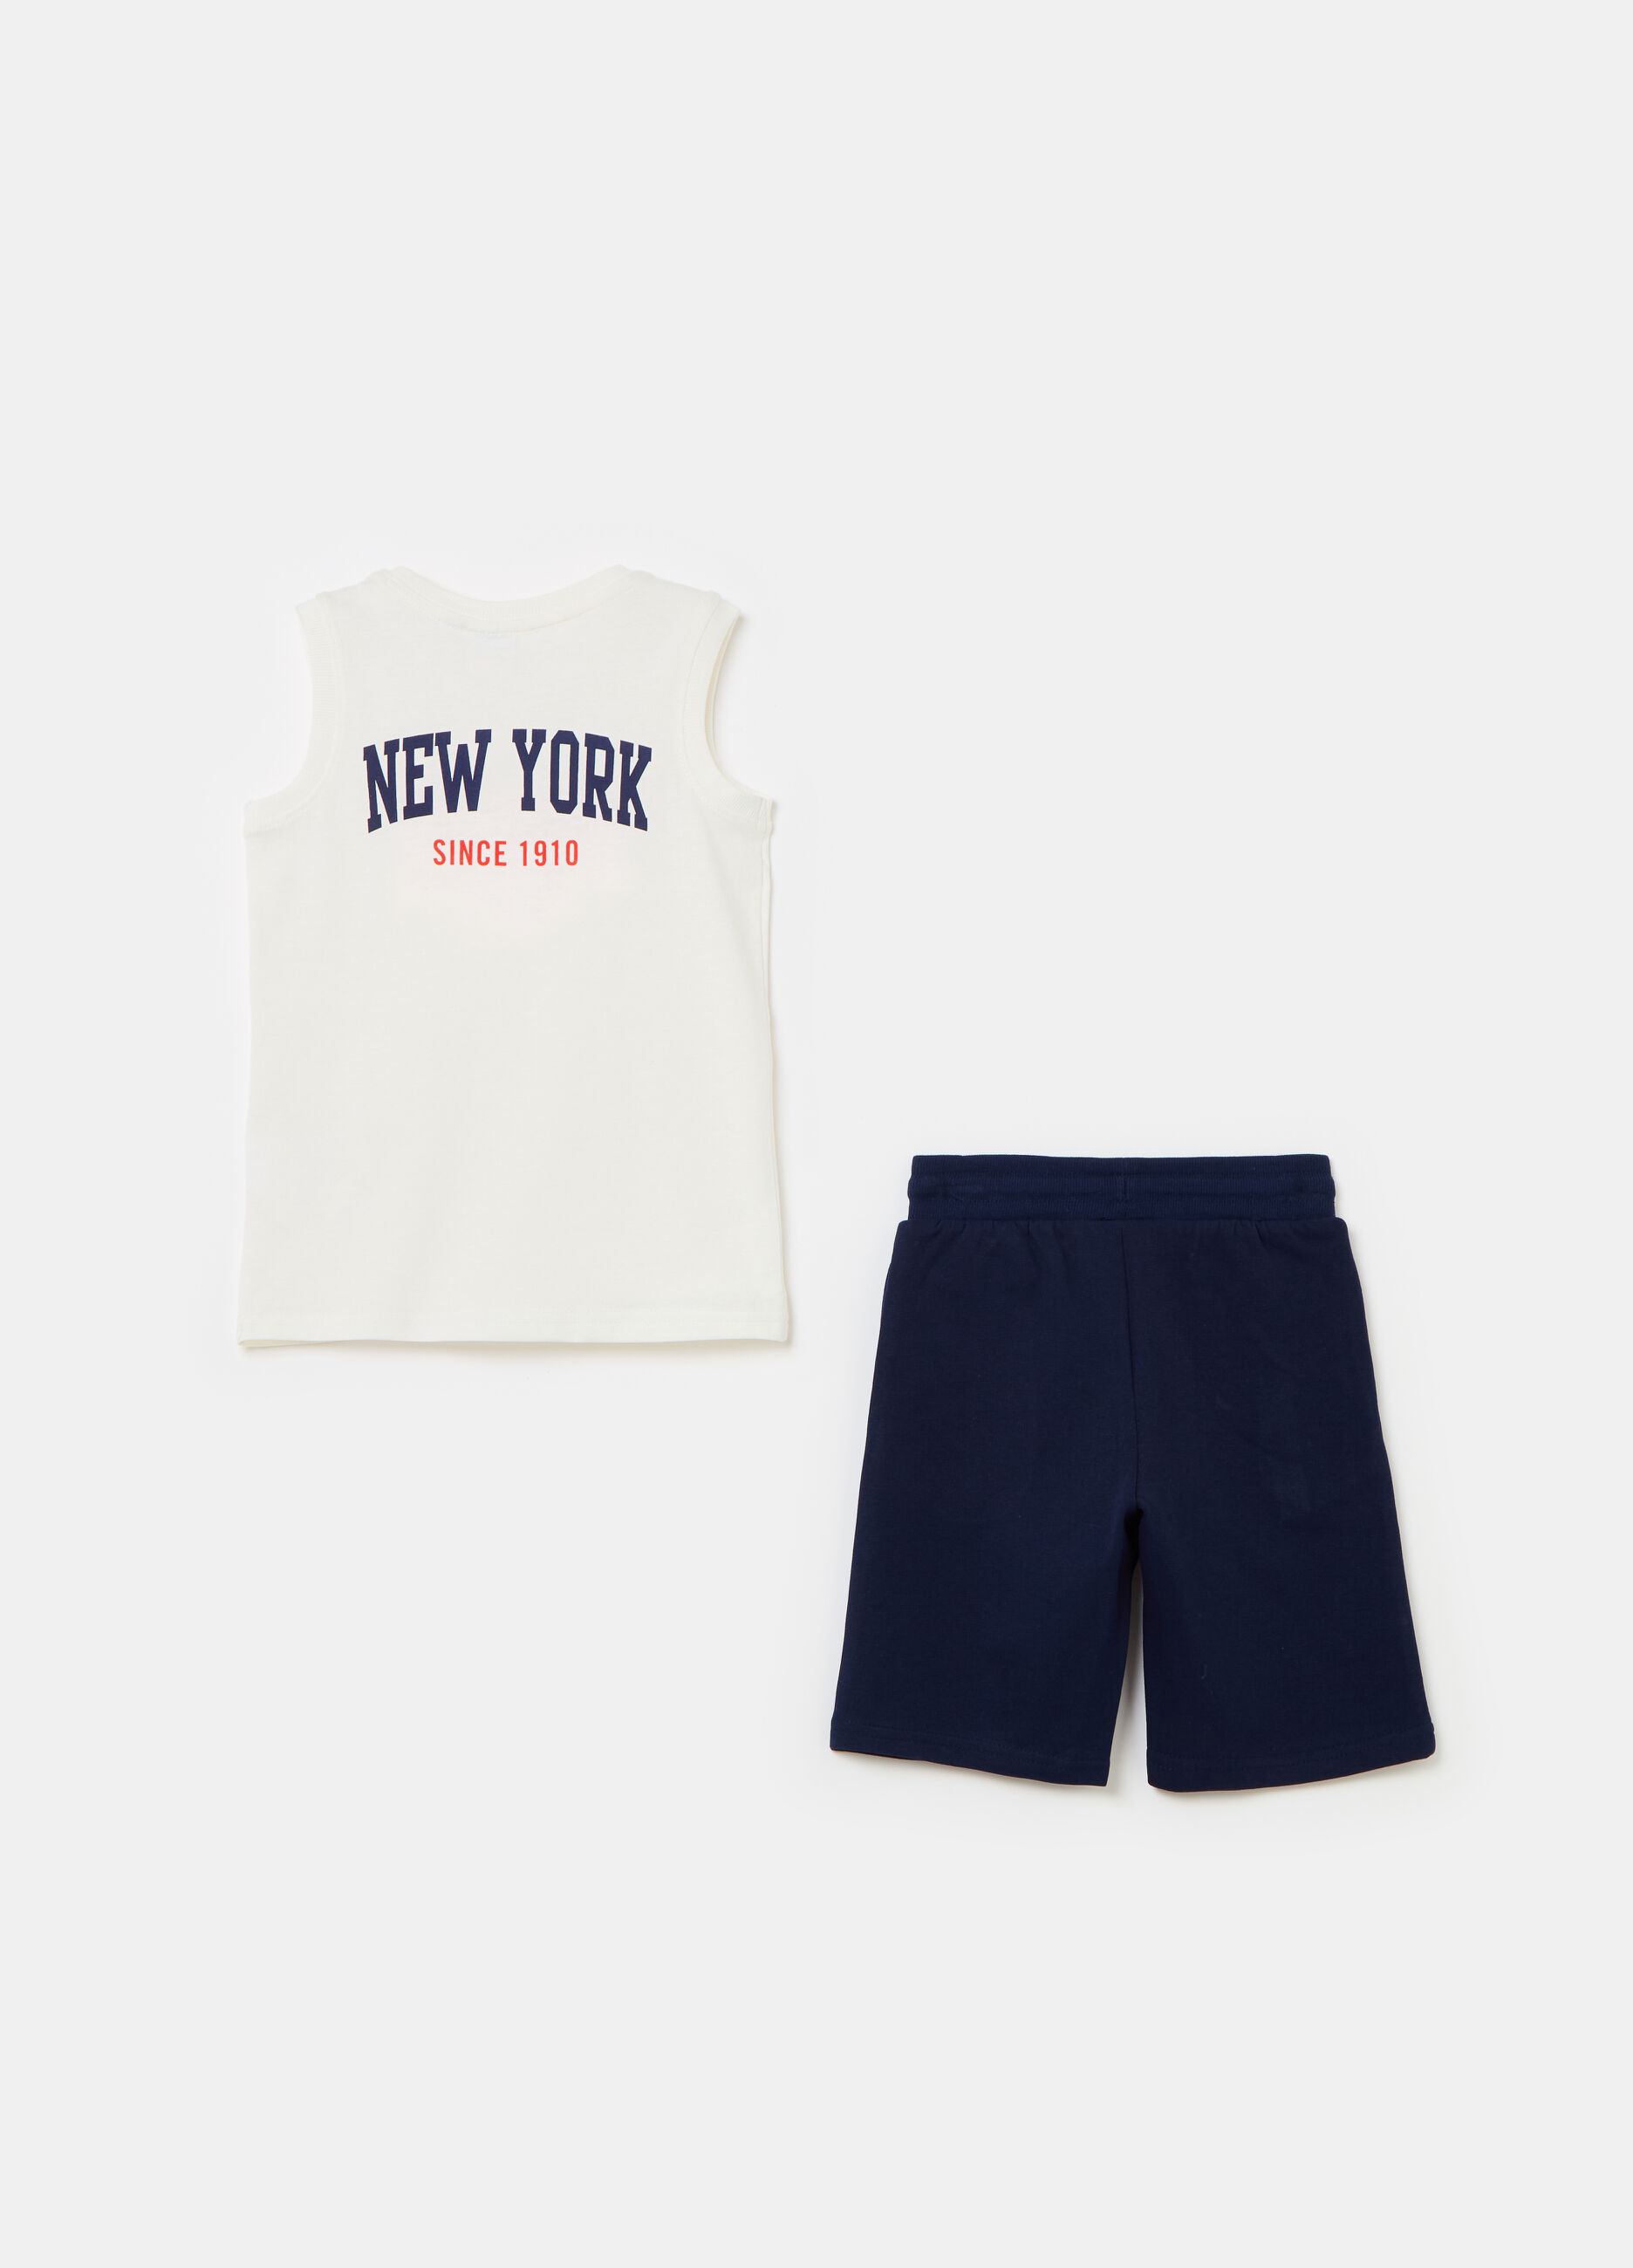 Racerback top and Bermuda shorts with logo print jogging set